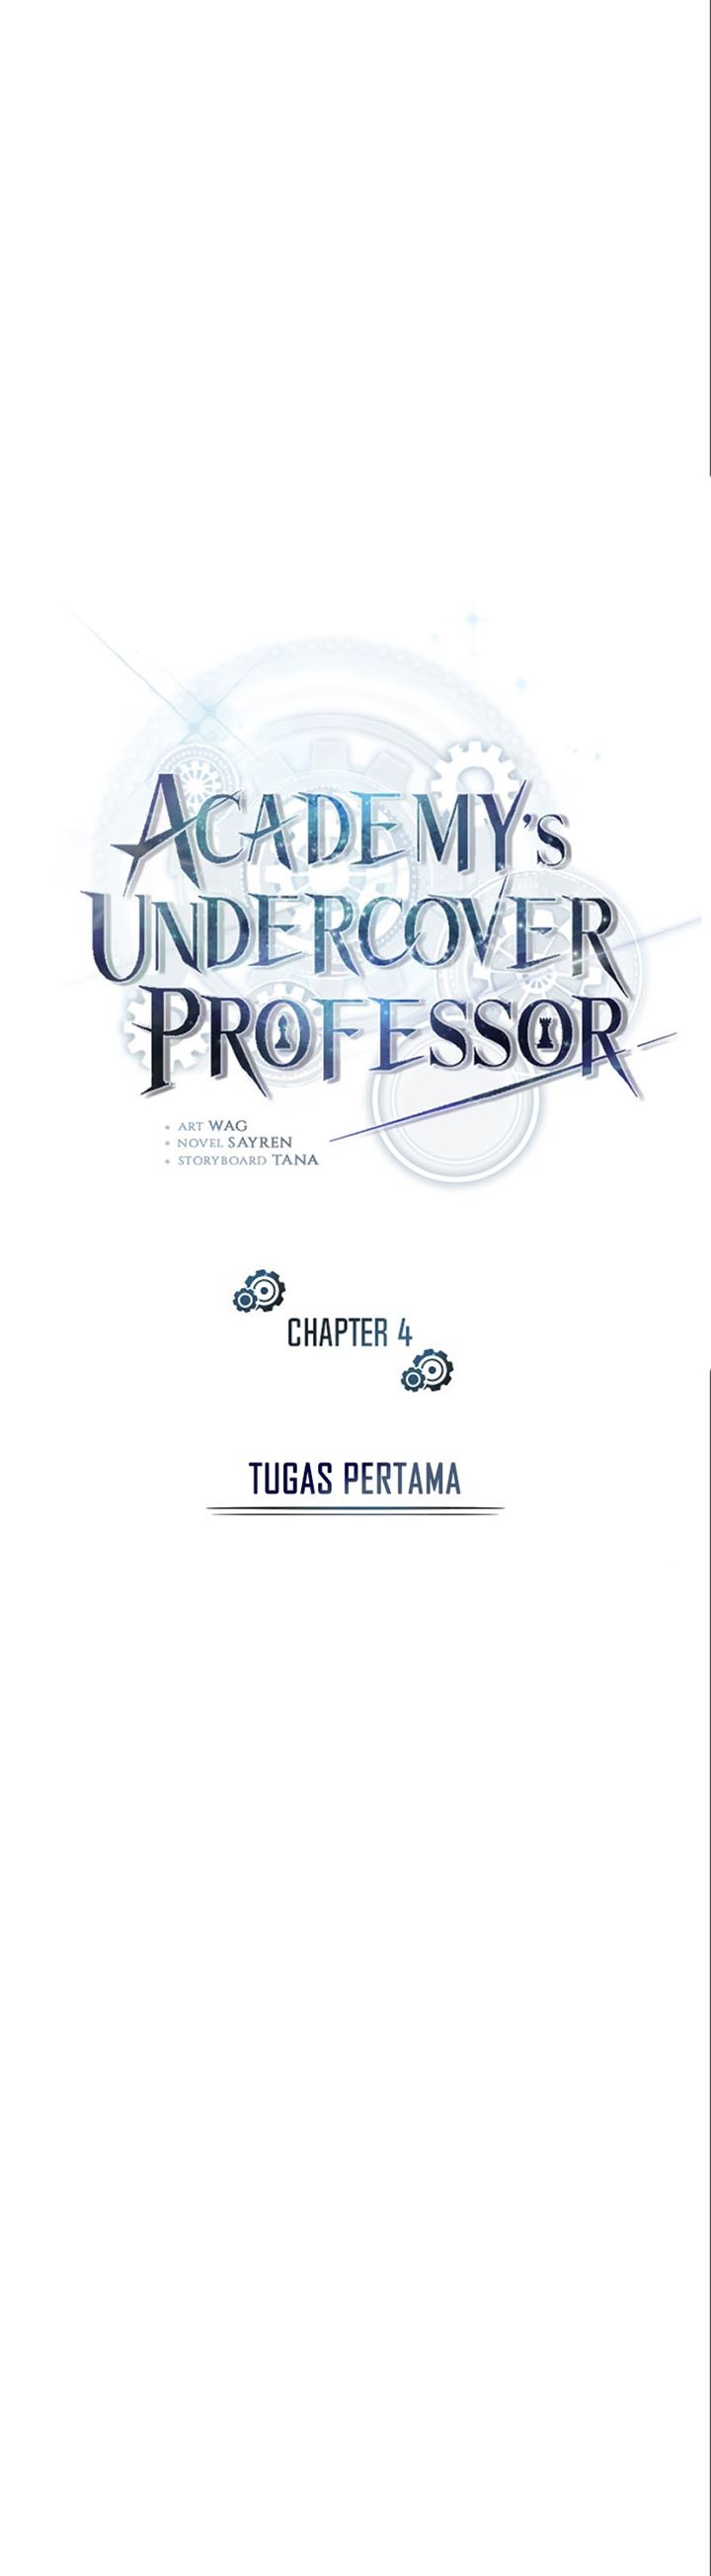 Academy’s Undercover Professor Chapter 4